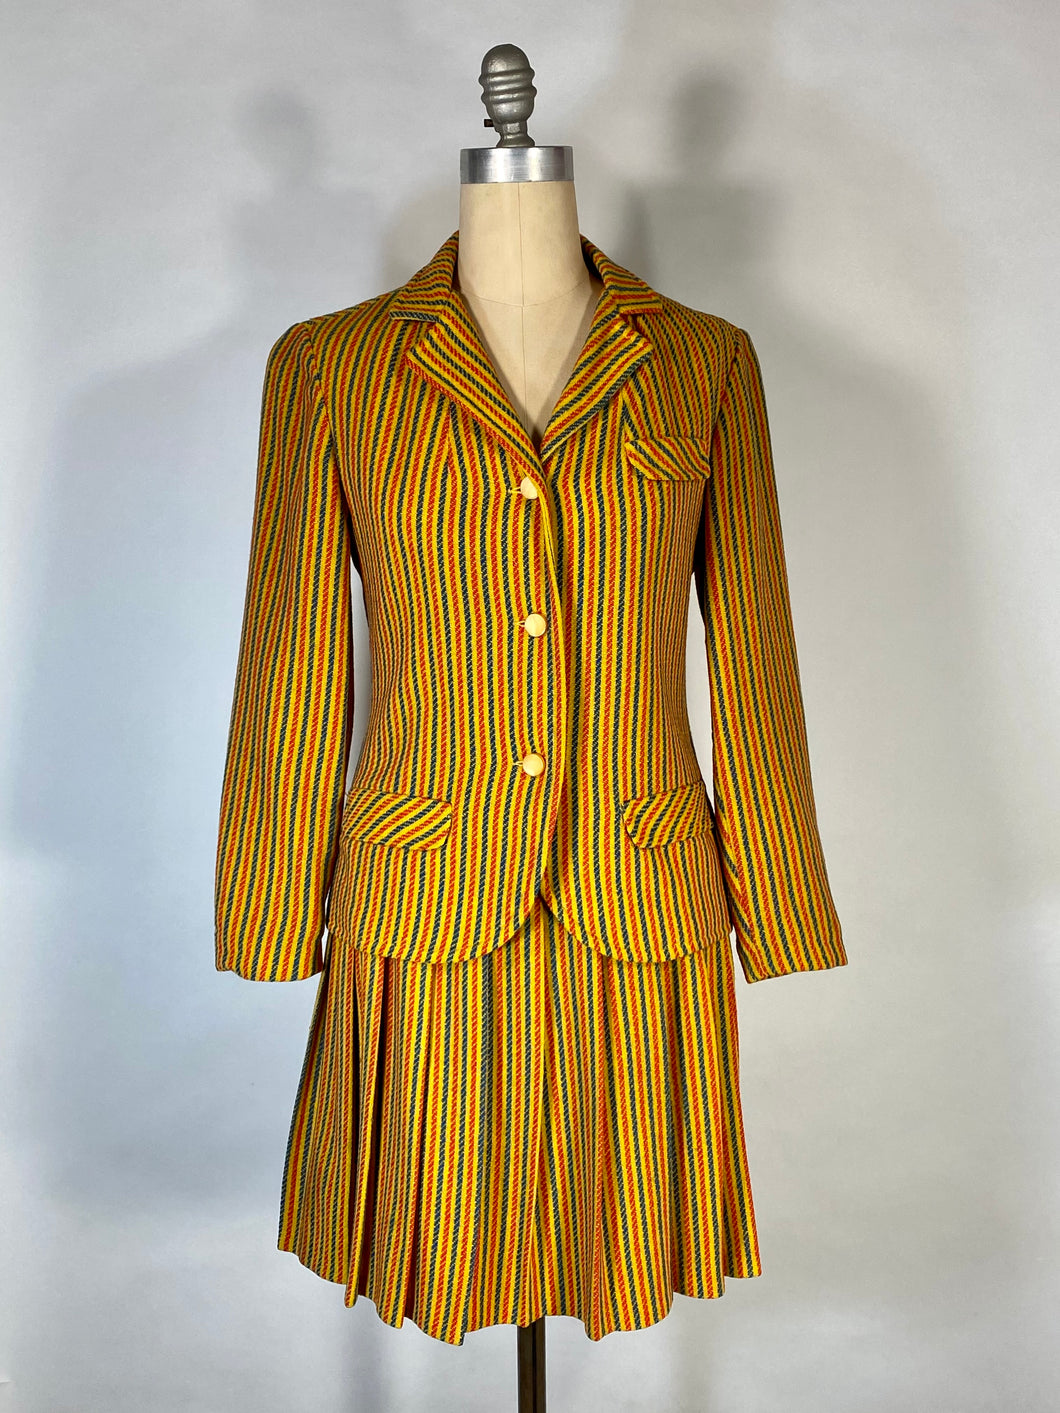 1960’s-70’s Mod wool primary color stripe skirt suit 2-pc set